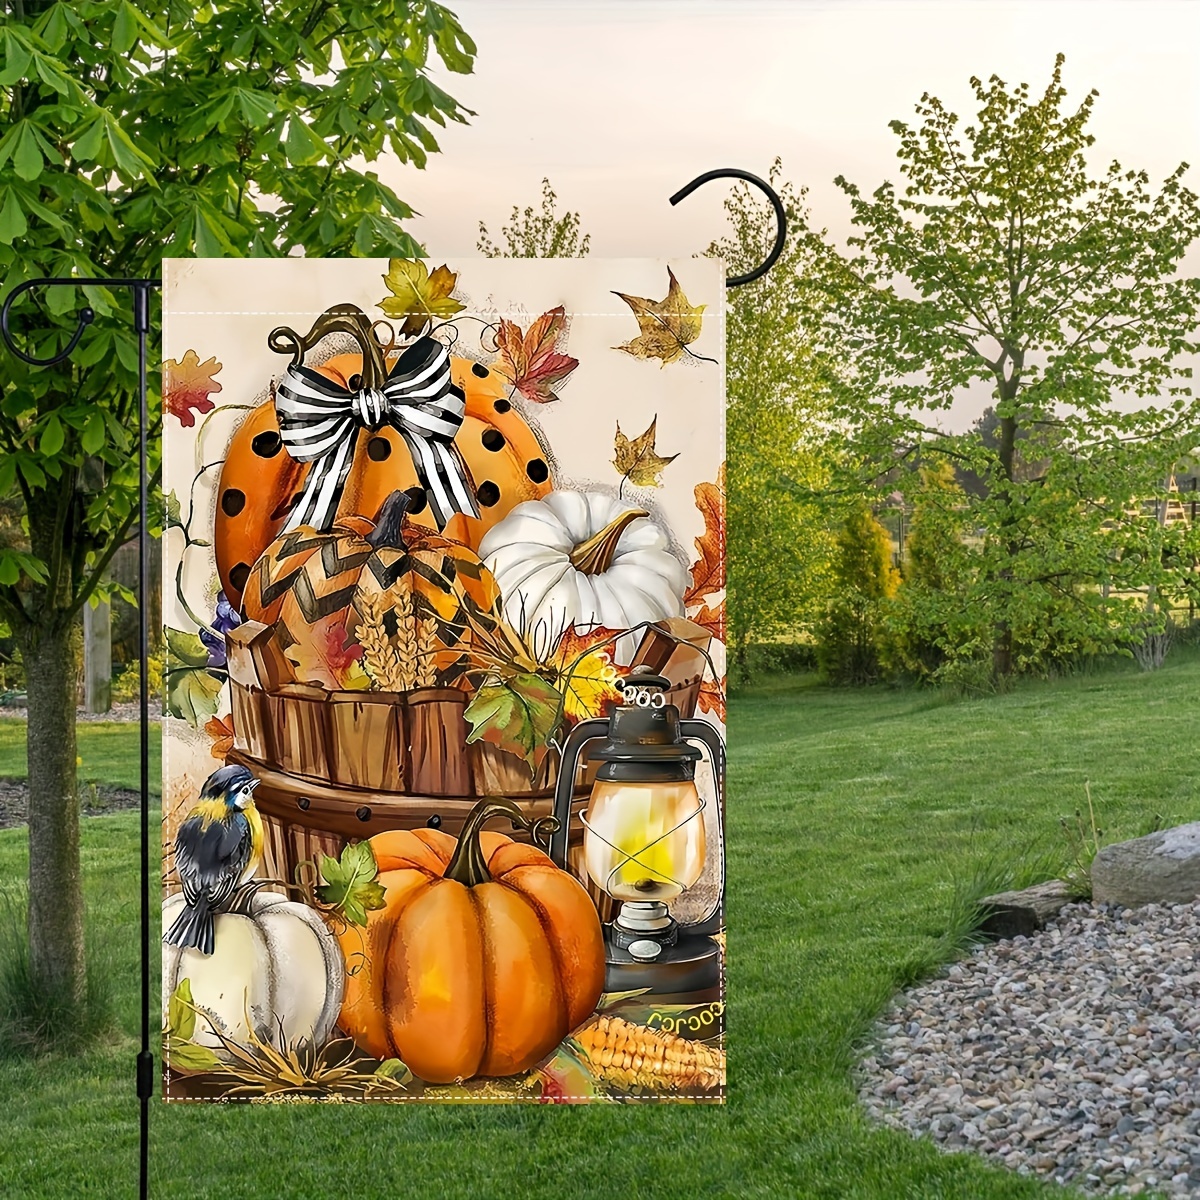 

1pc, Autumn Pumpkin Harvest Garden Flag, Autumn Maple Leaf Flag, Lawn Farm Garden Decor 12 X 18 Inches Garden Decor Double-sided, Home Decor, Yard Decor, Outdoor Decor, Lawn Decor, Flag Only